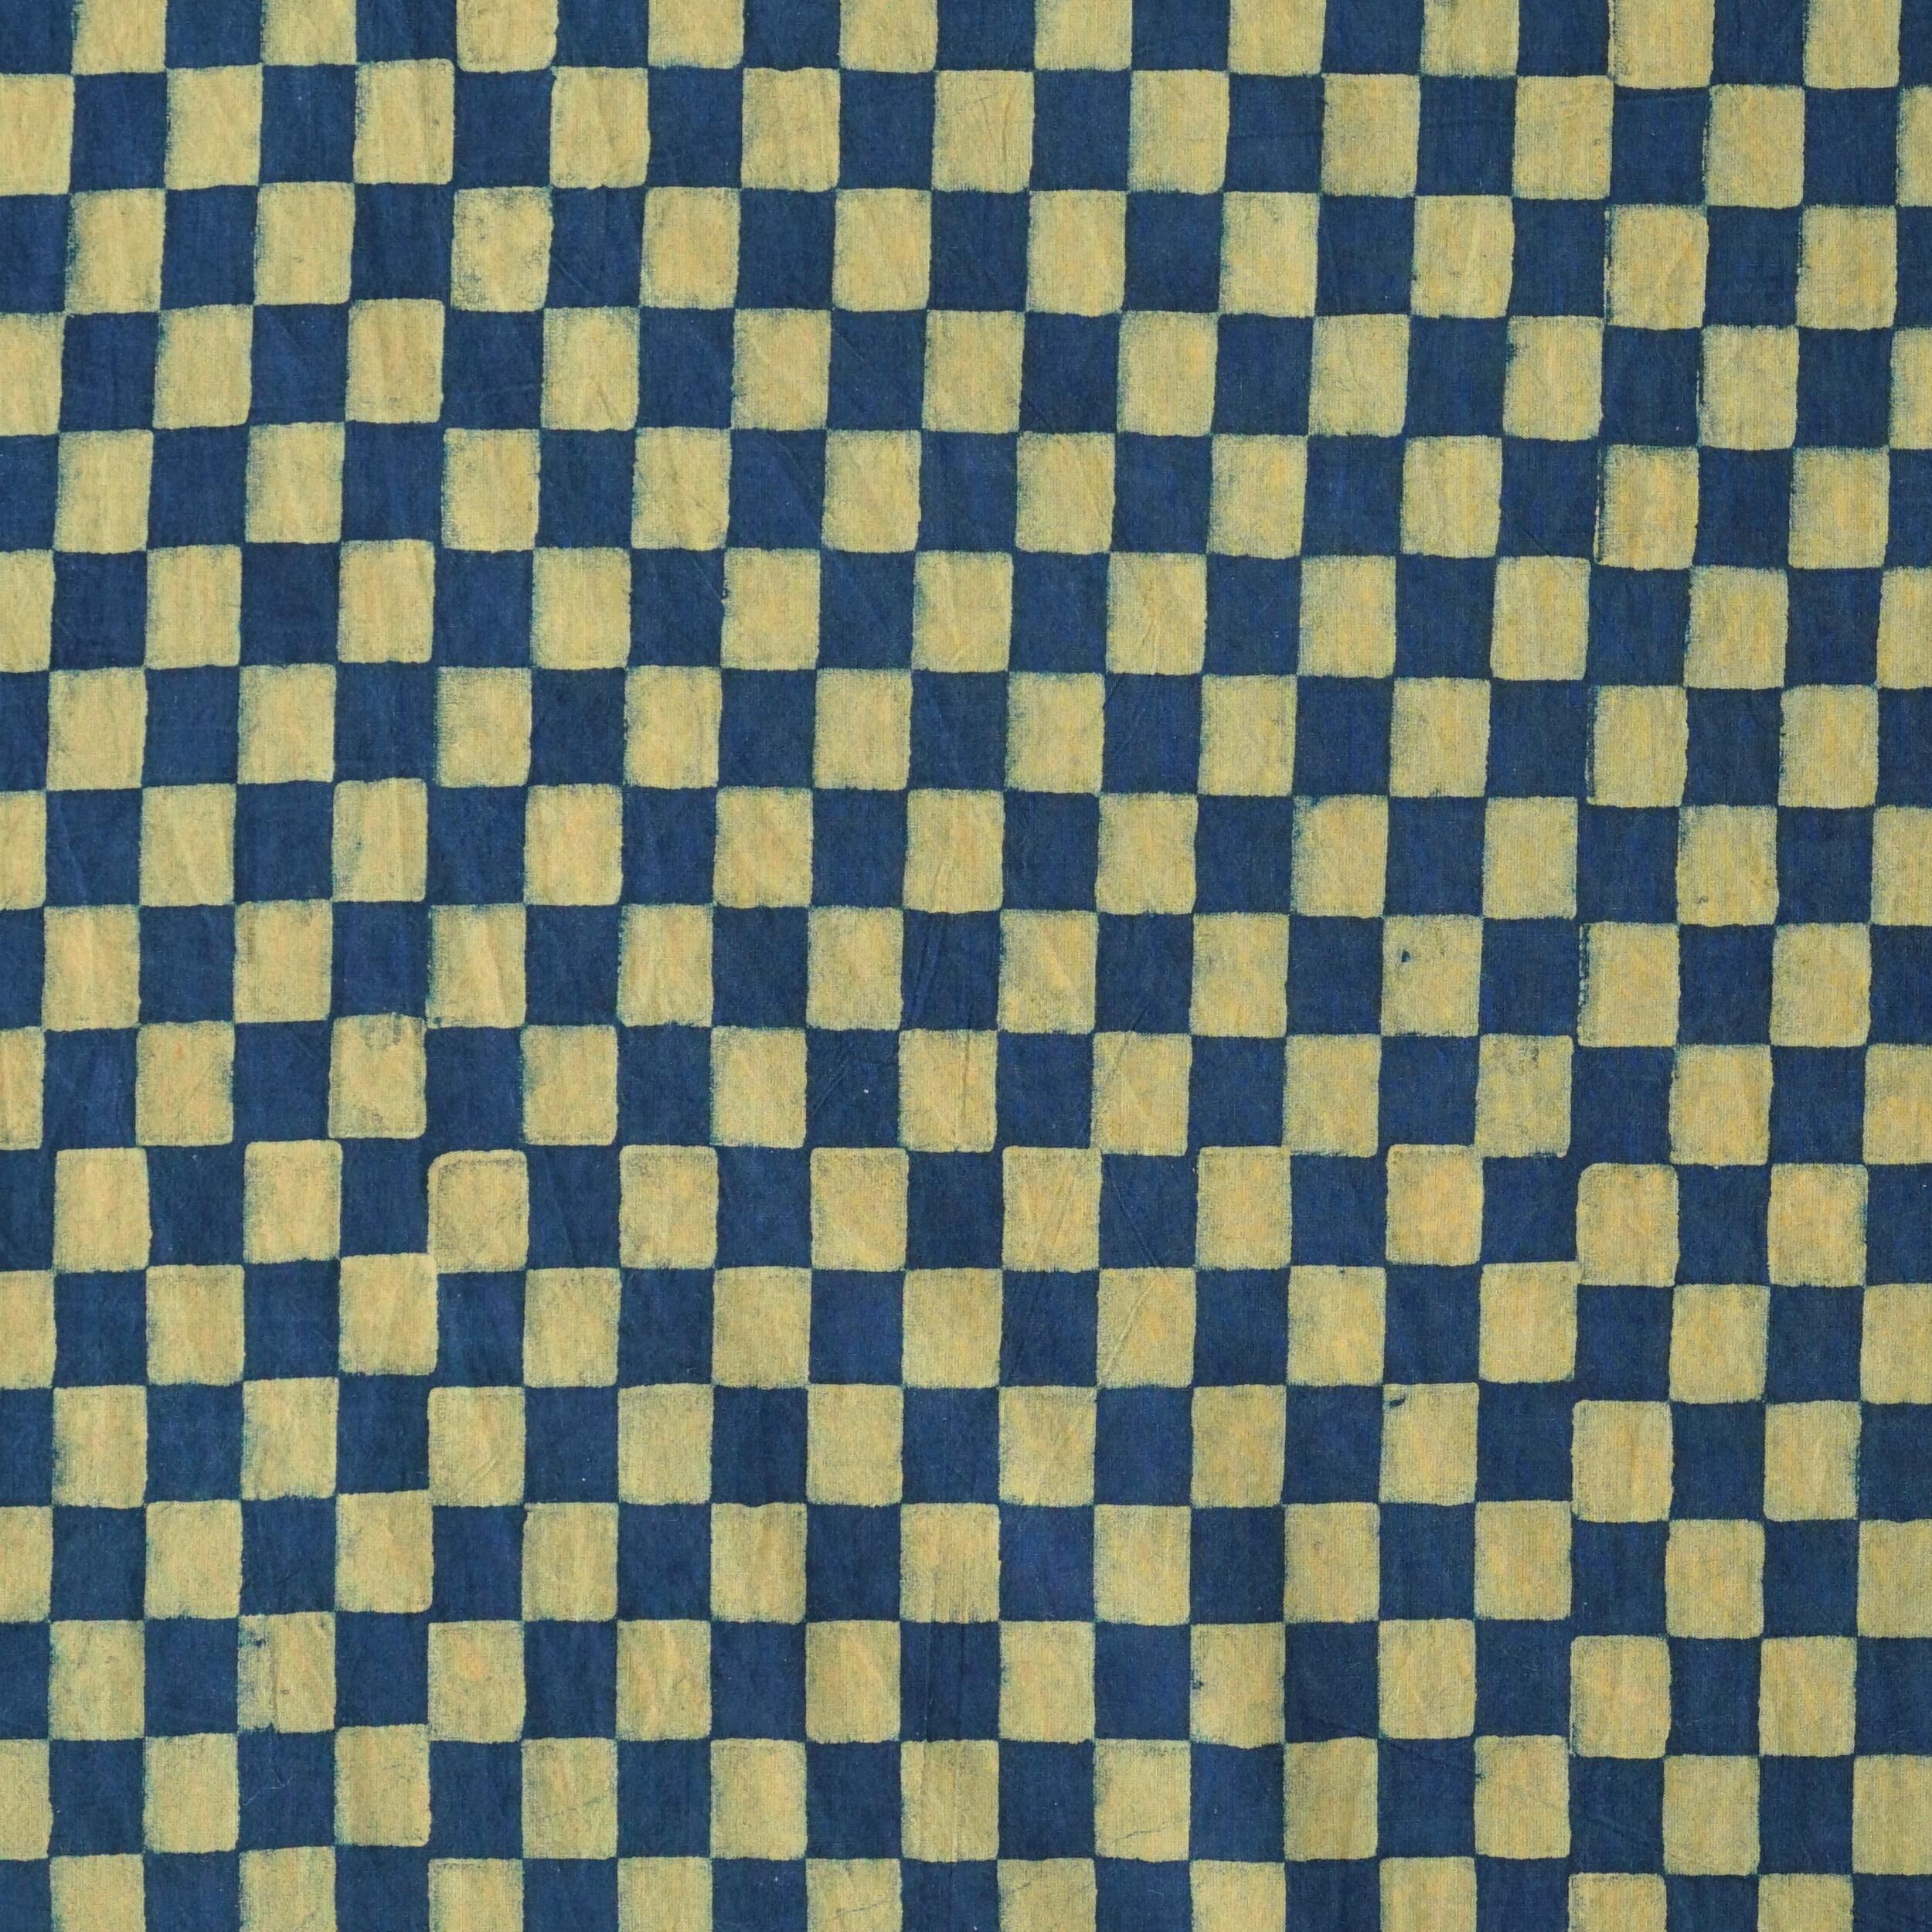 2 - AHM56 - Block-Printed Fabric - Checkerboard - Indigo & Tamarisk Yellow Dyes - Flat